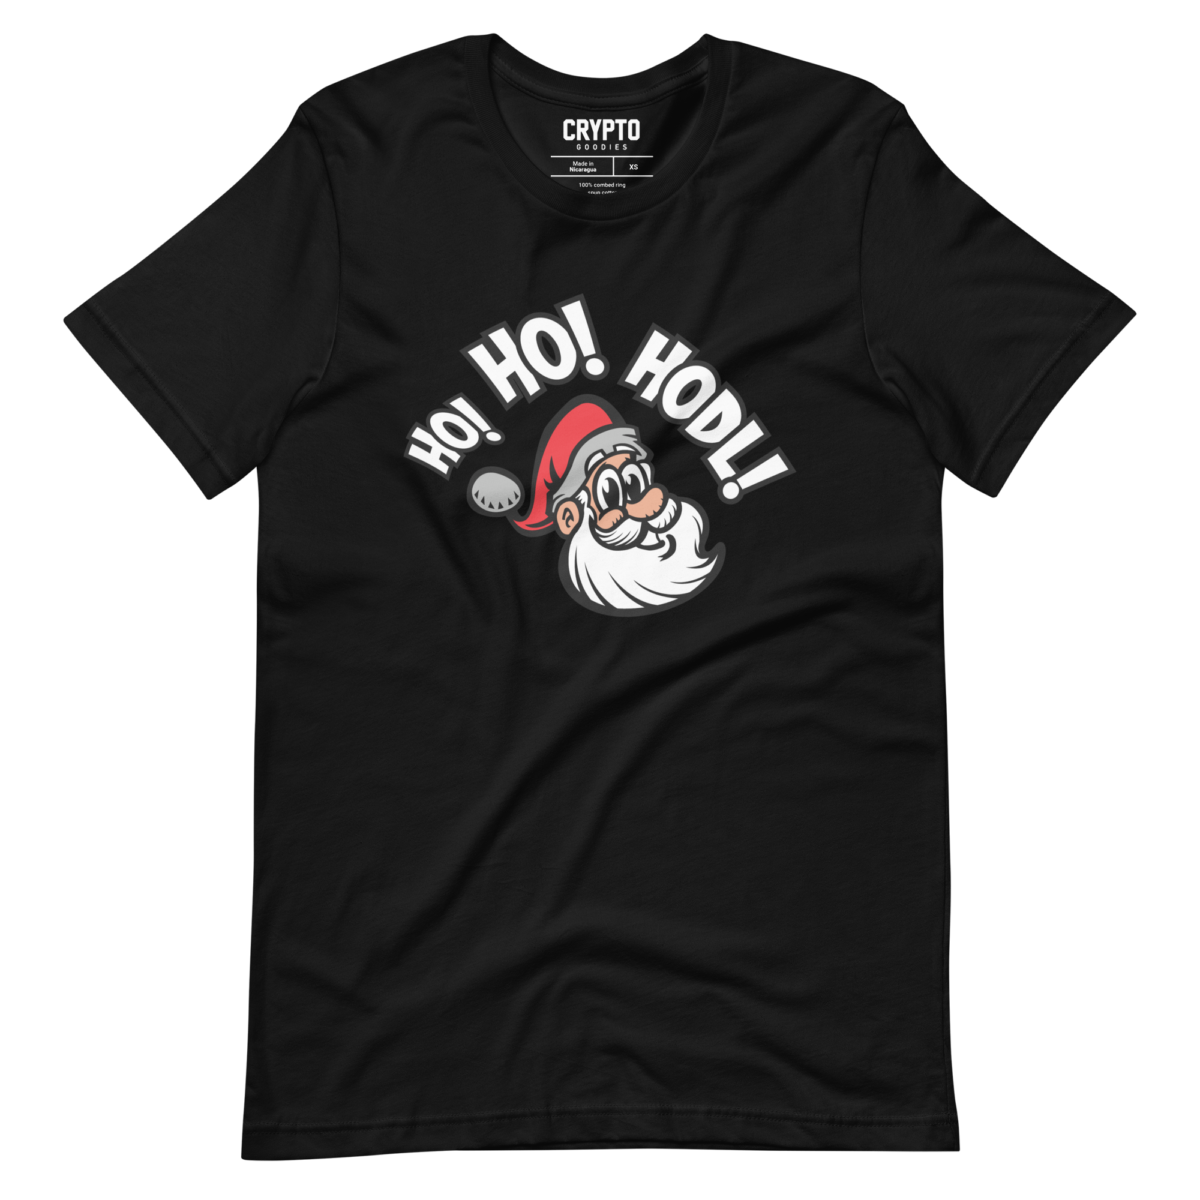 unisex staple t shirt black front 637e9a650d8b4 - HO! HO! HODL T-Shirt